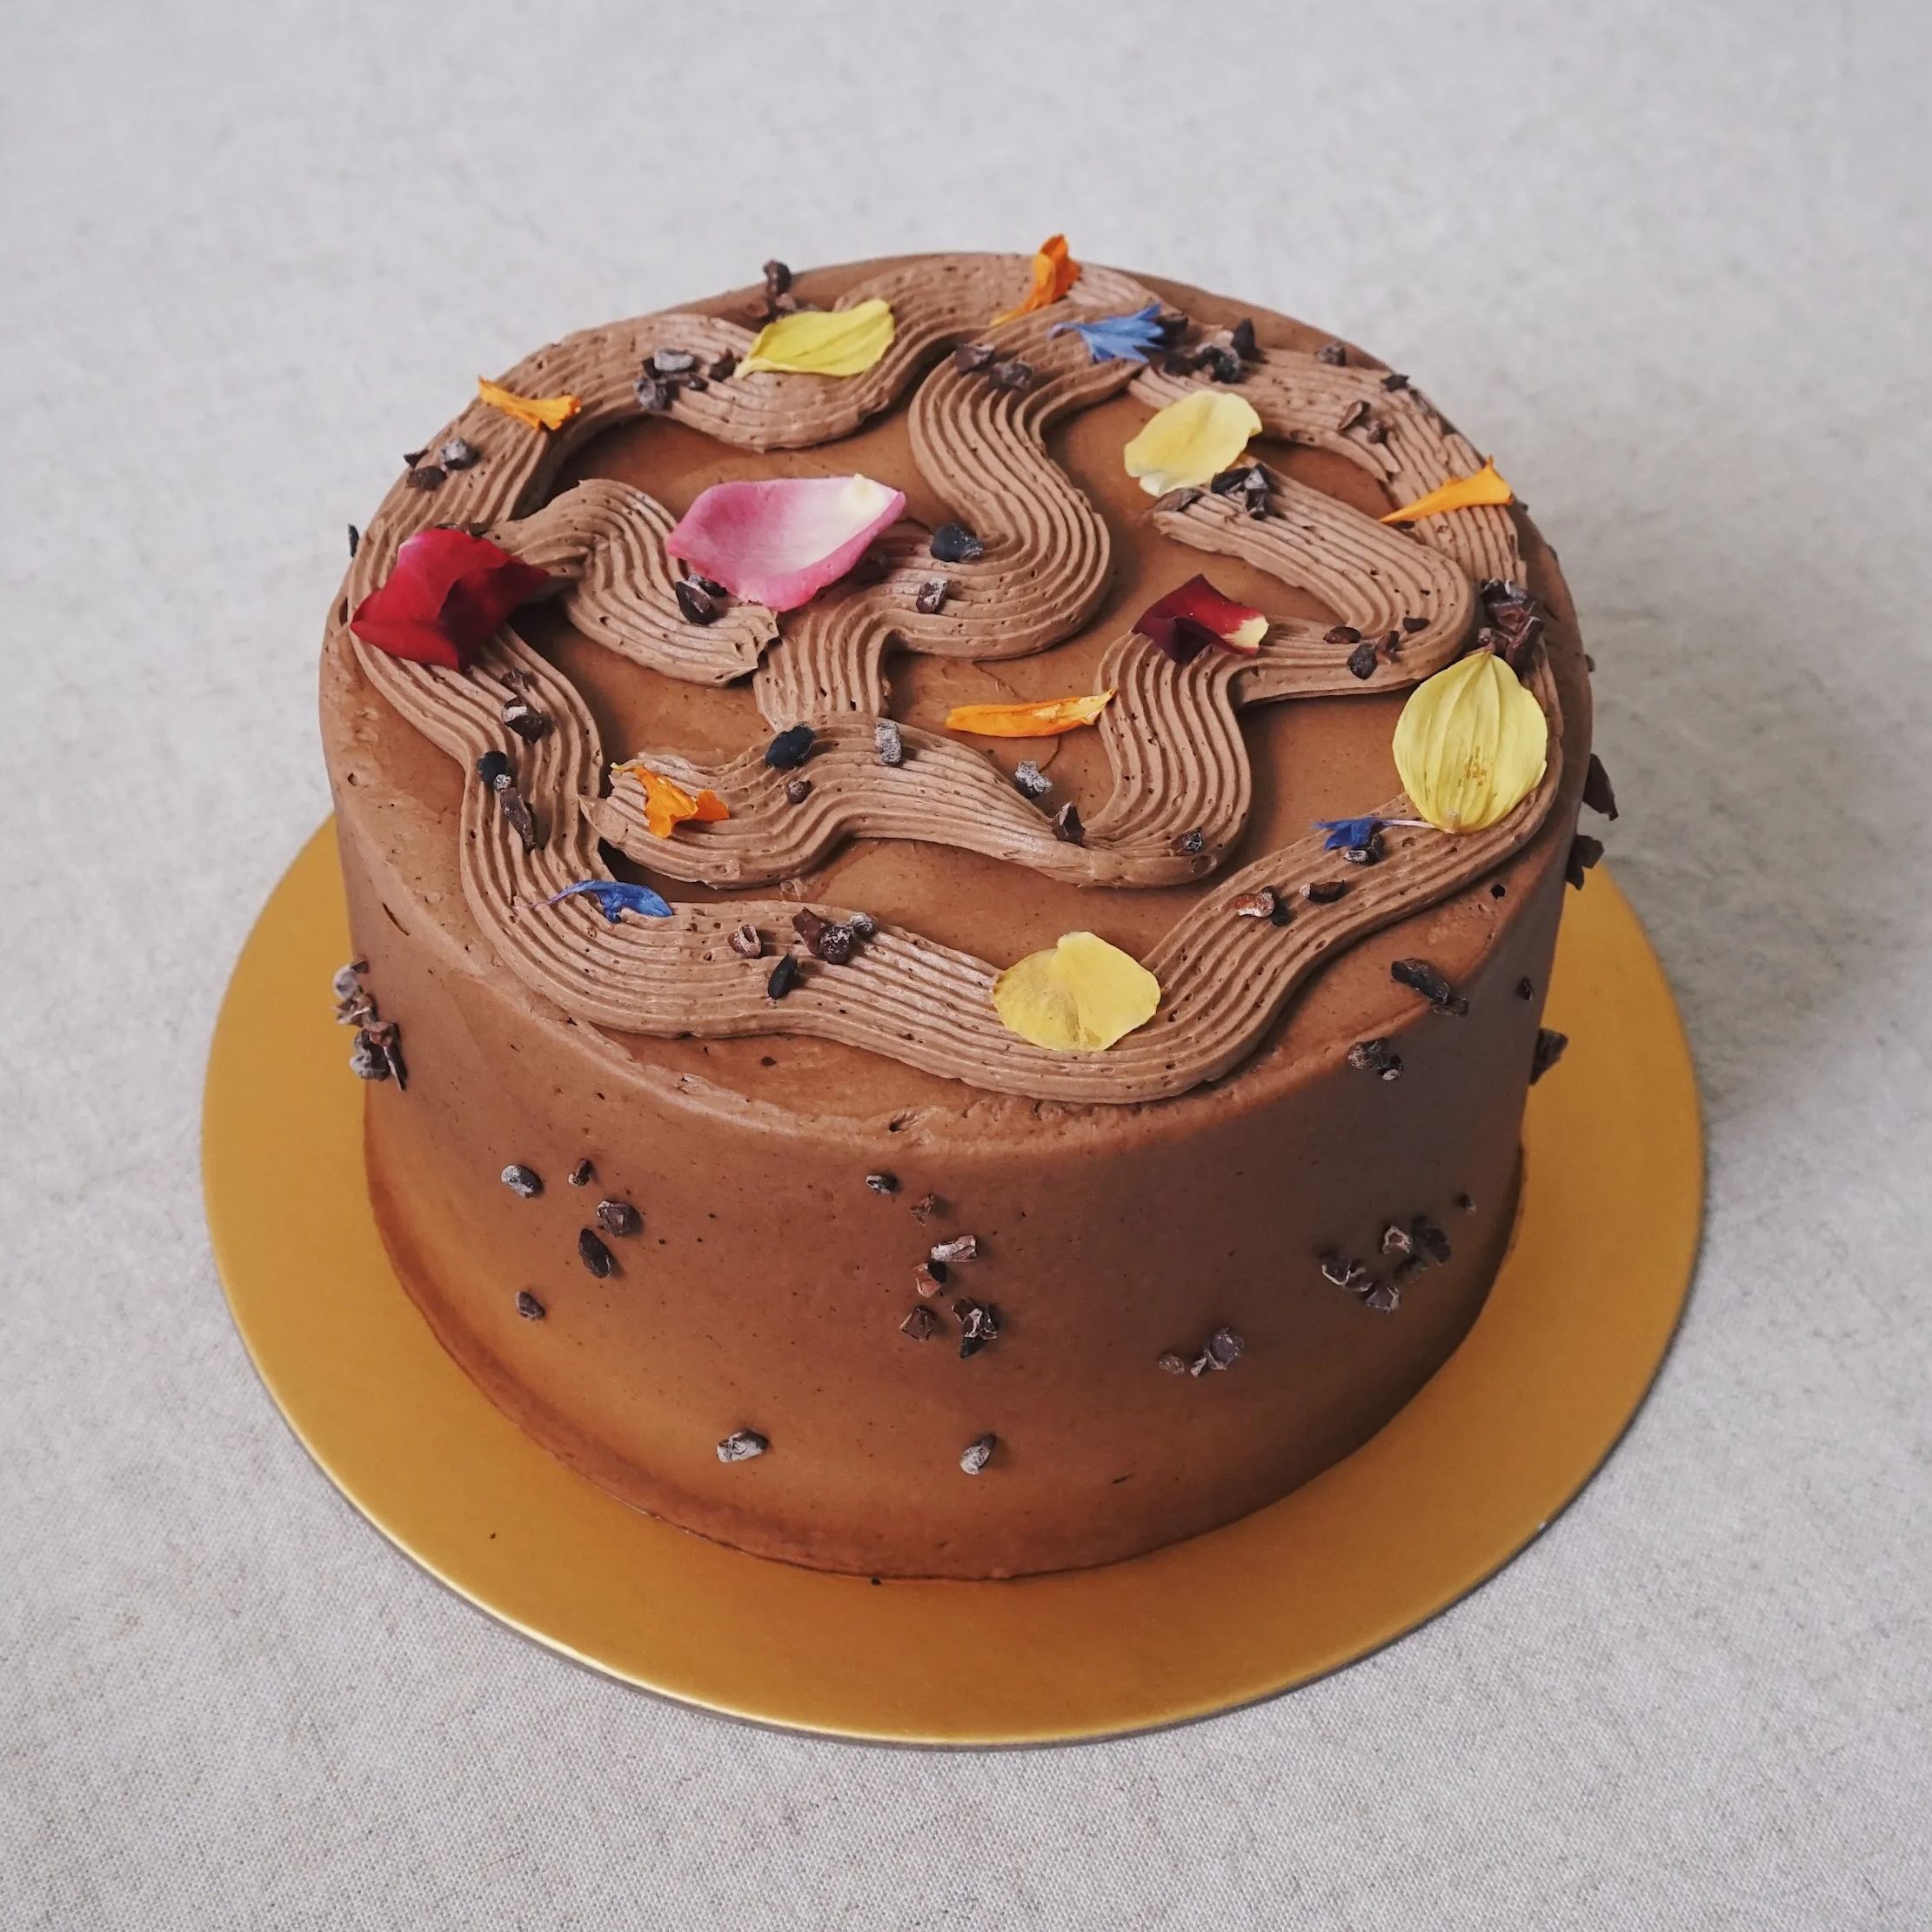 [3 DAYS ADVANCE NOTICE] Chocolate Fudge Cake